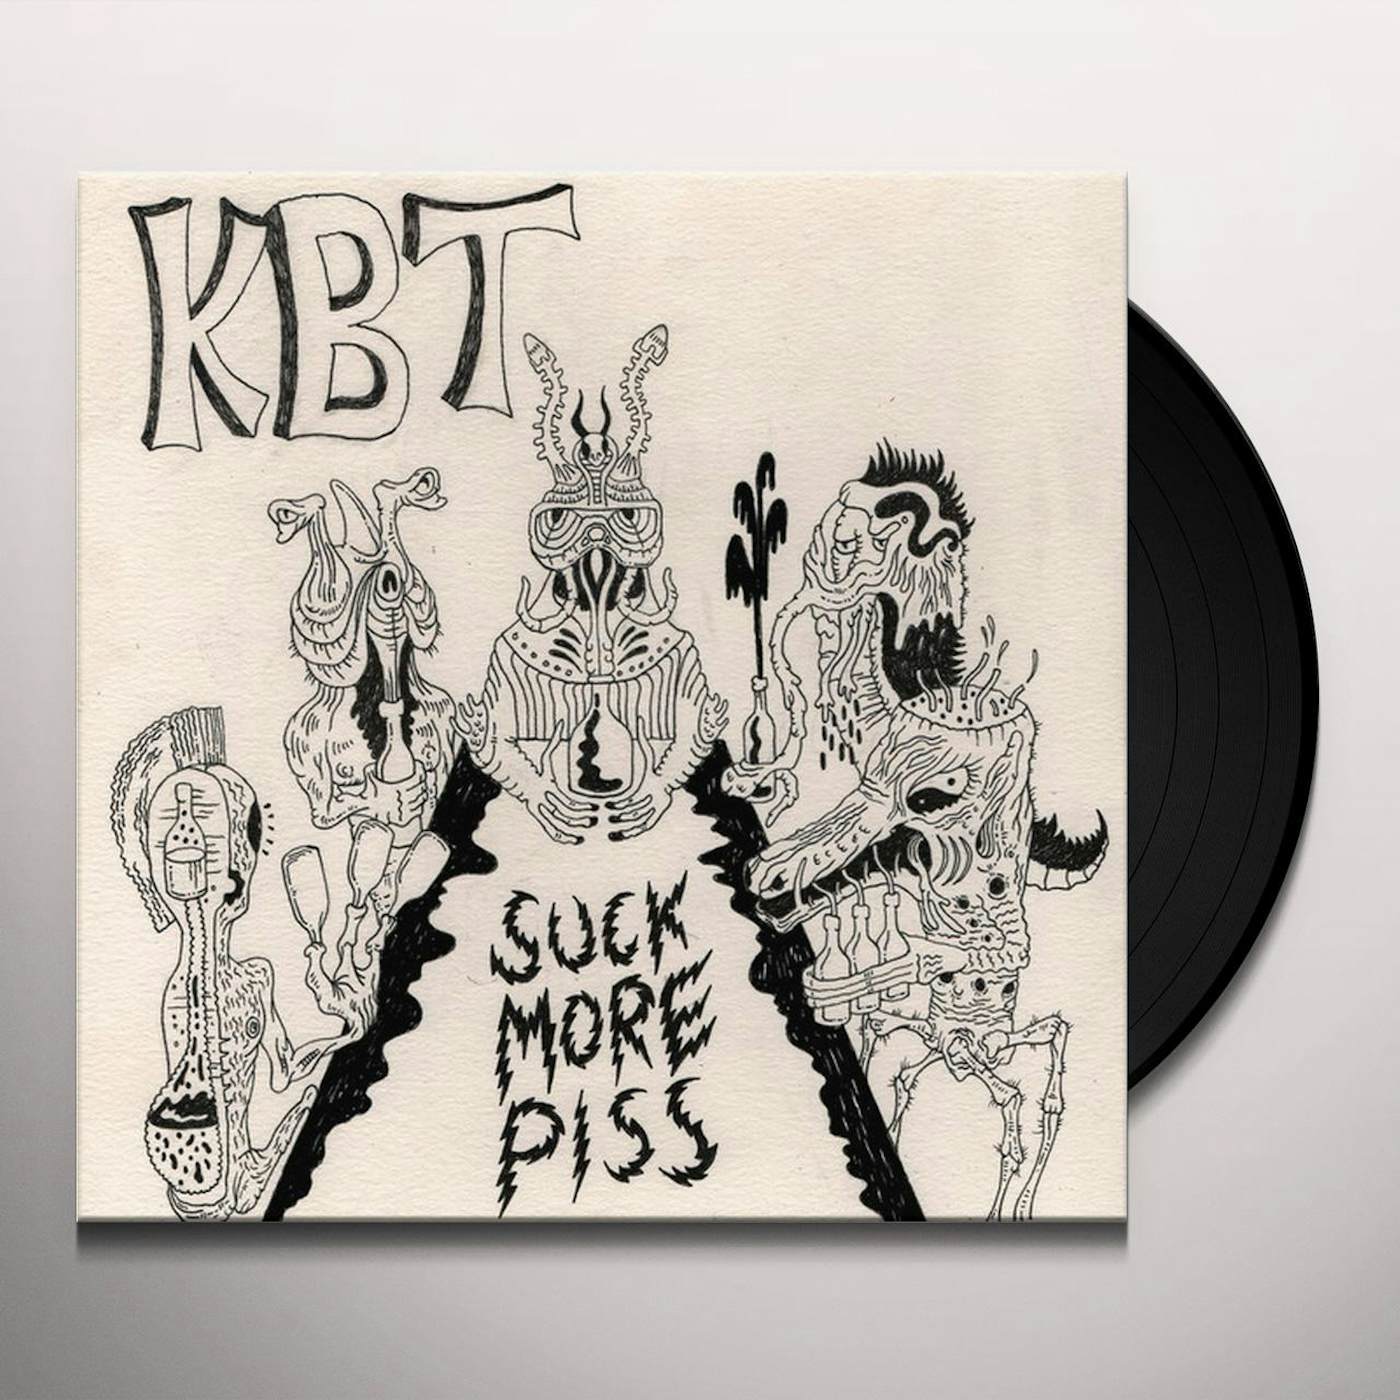 KBT Suck More Piss Vinyl Record